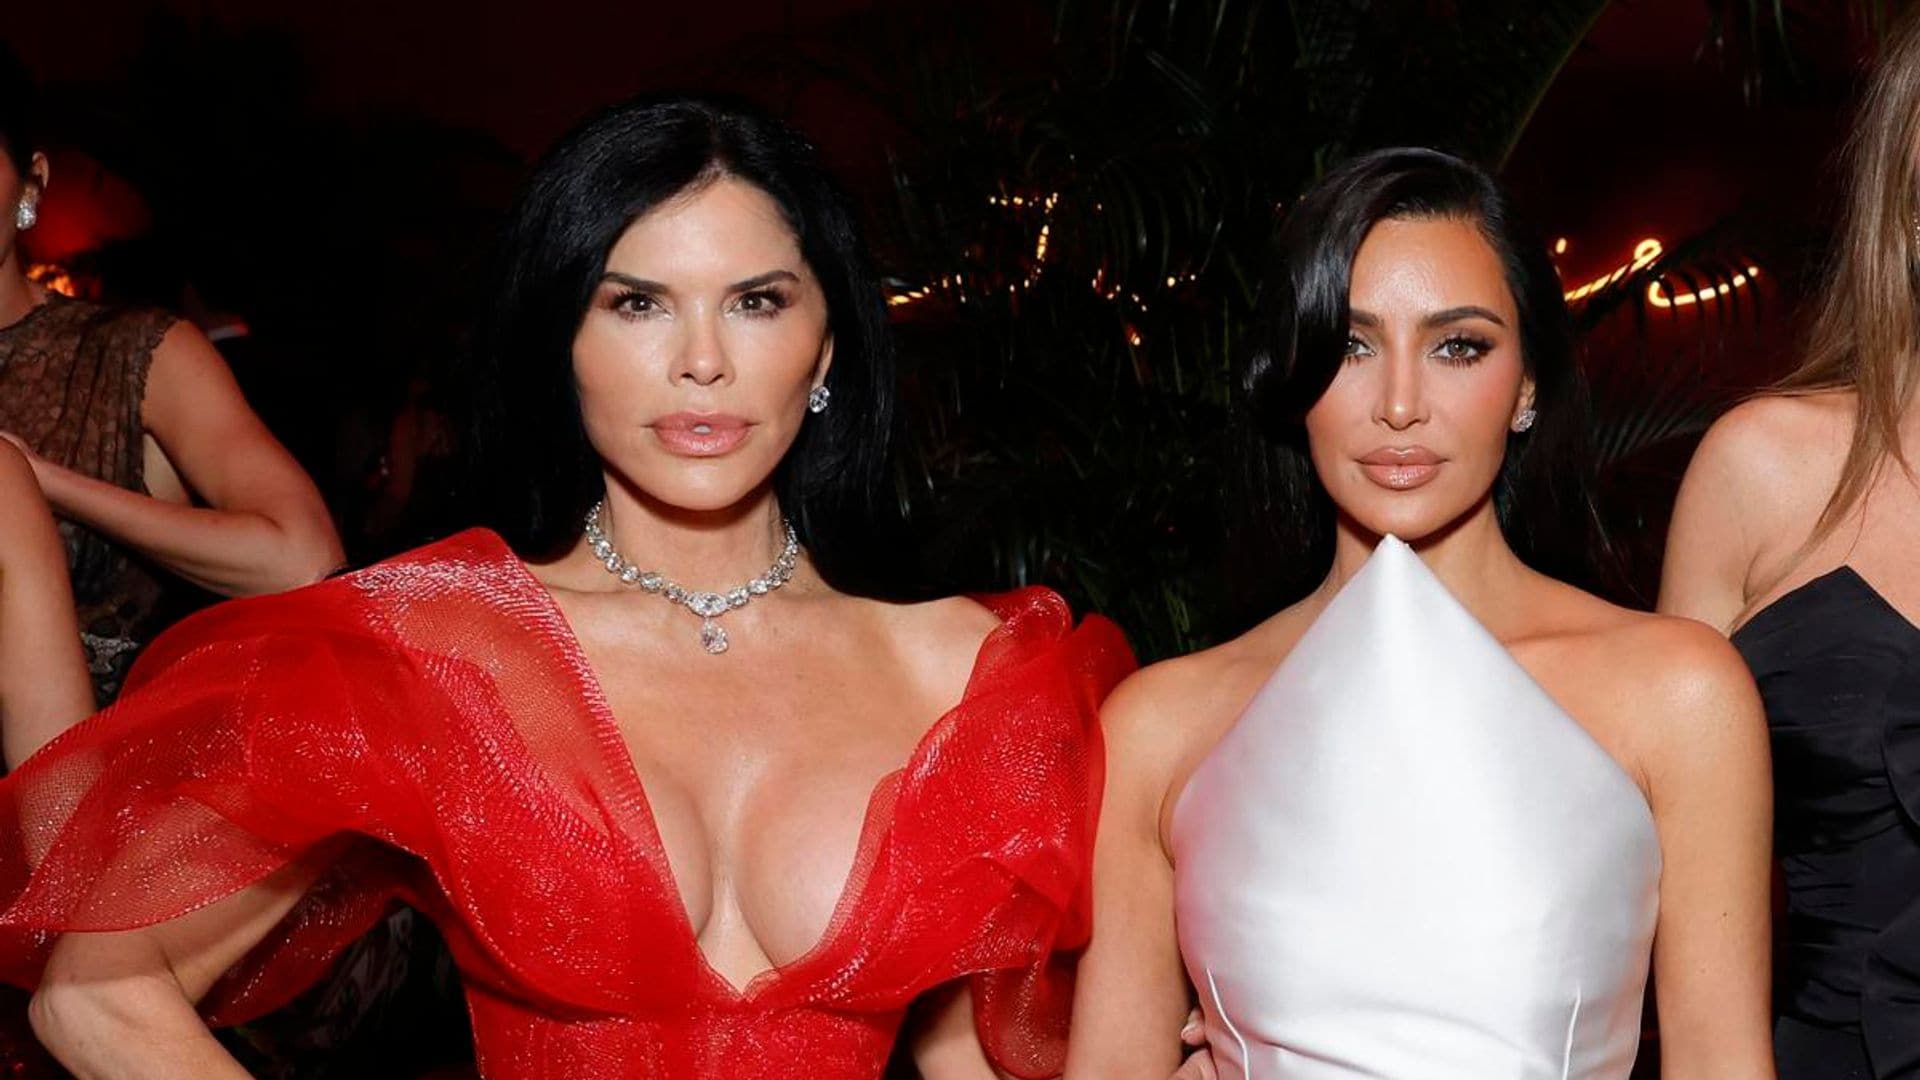 Lauren Sánchez and Ivanka Trump are officially part of Kim Kardashian’s besties